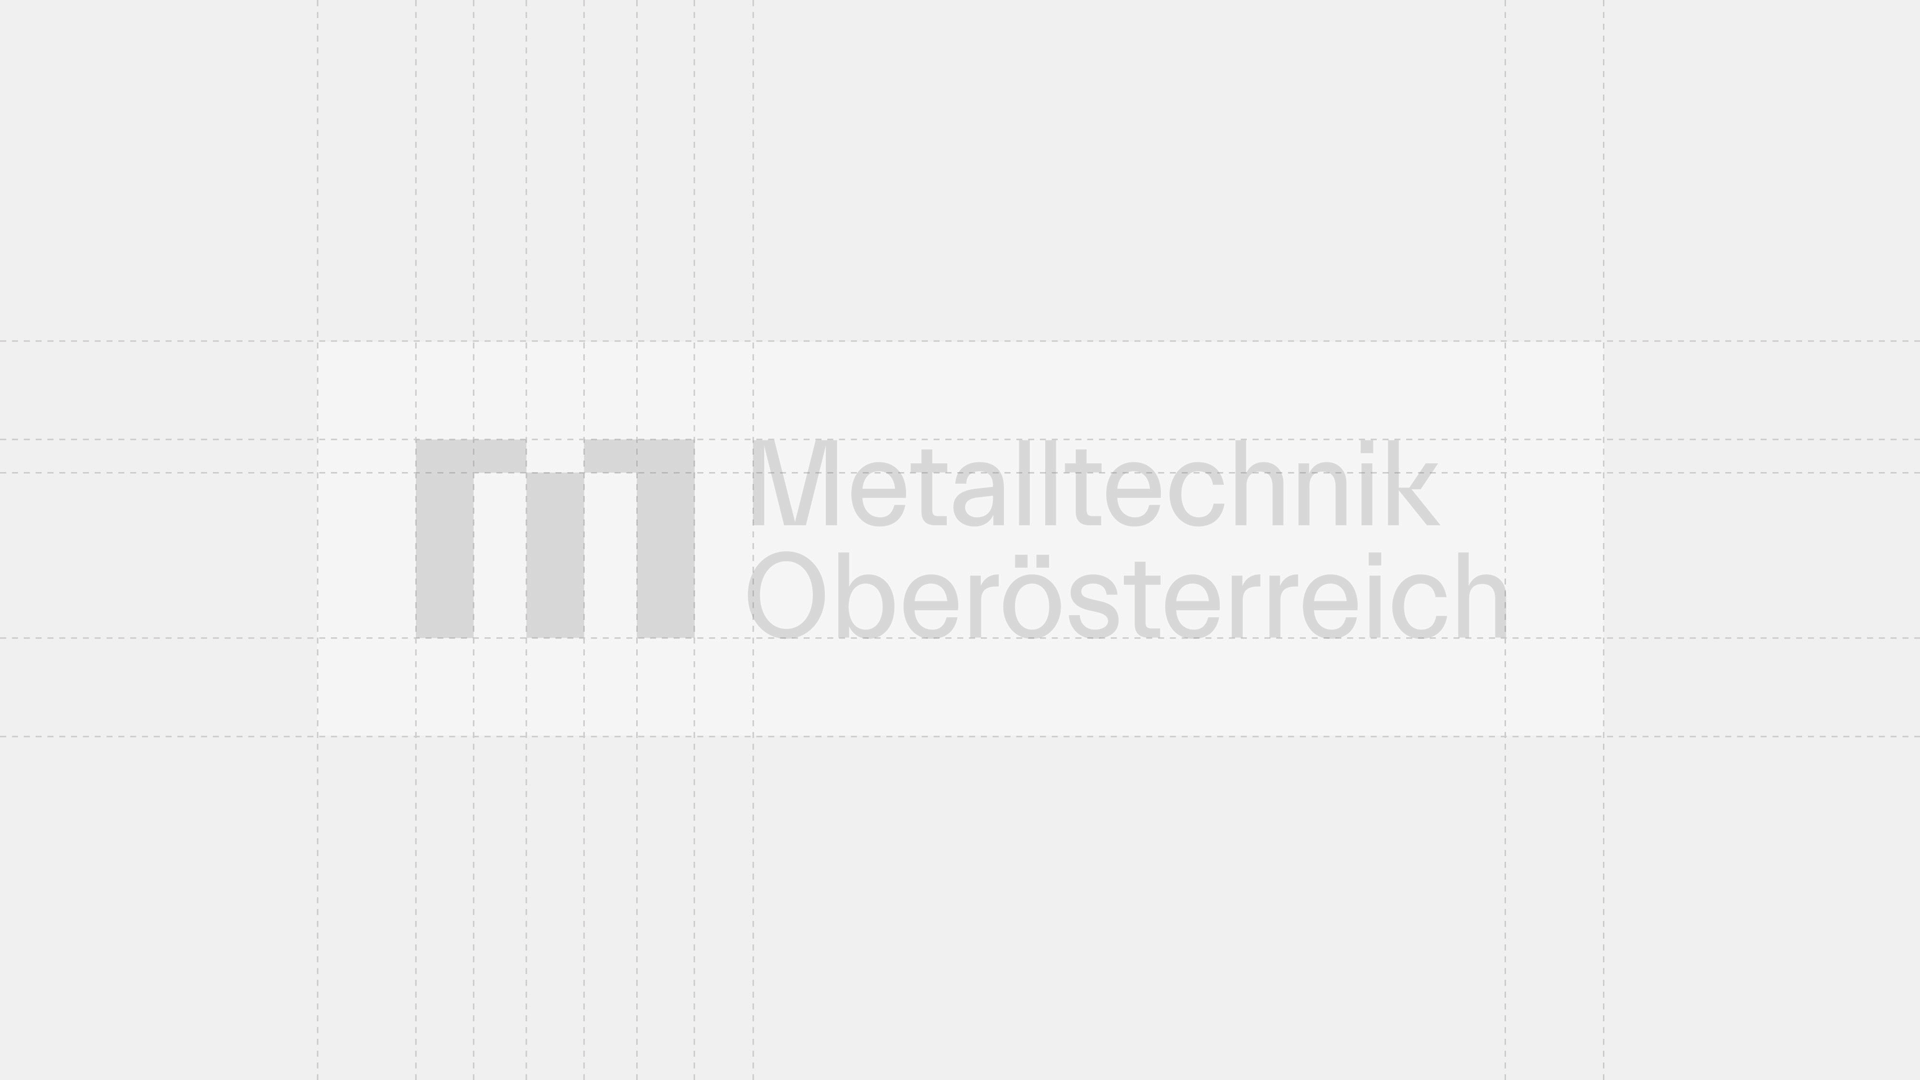 Metallinnung_OÖ_1920x1080_Logo